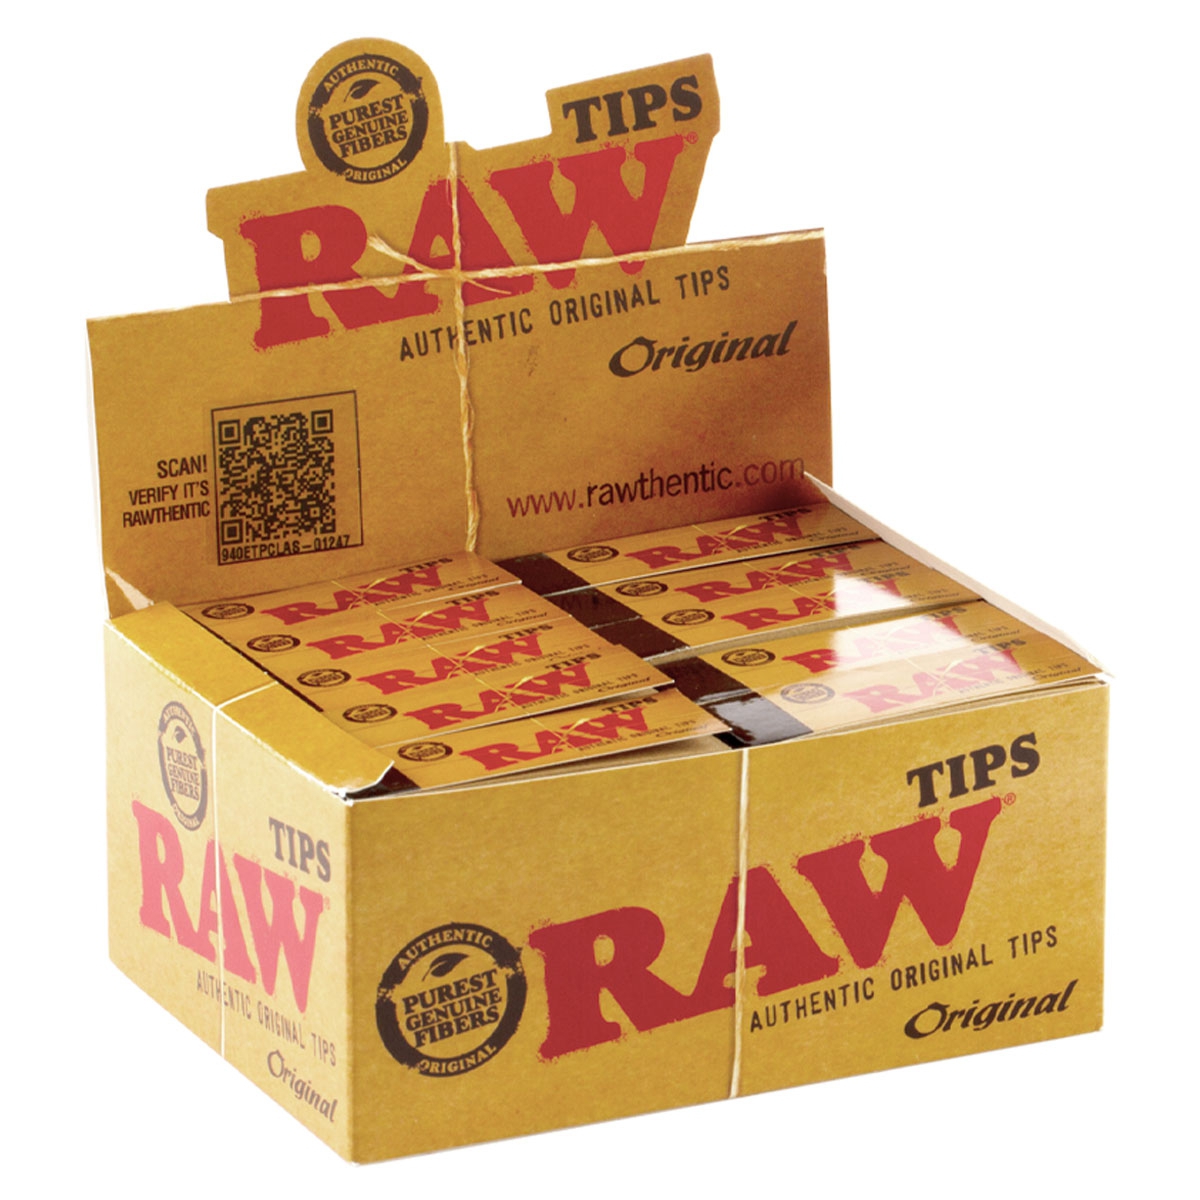 Raw Tips Natural Unrefined Tips Original 5 packs 